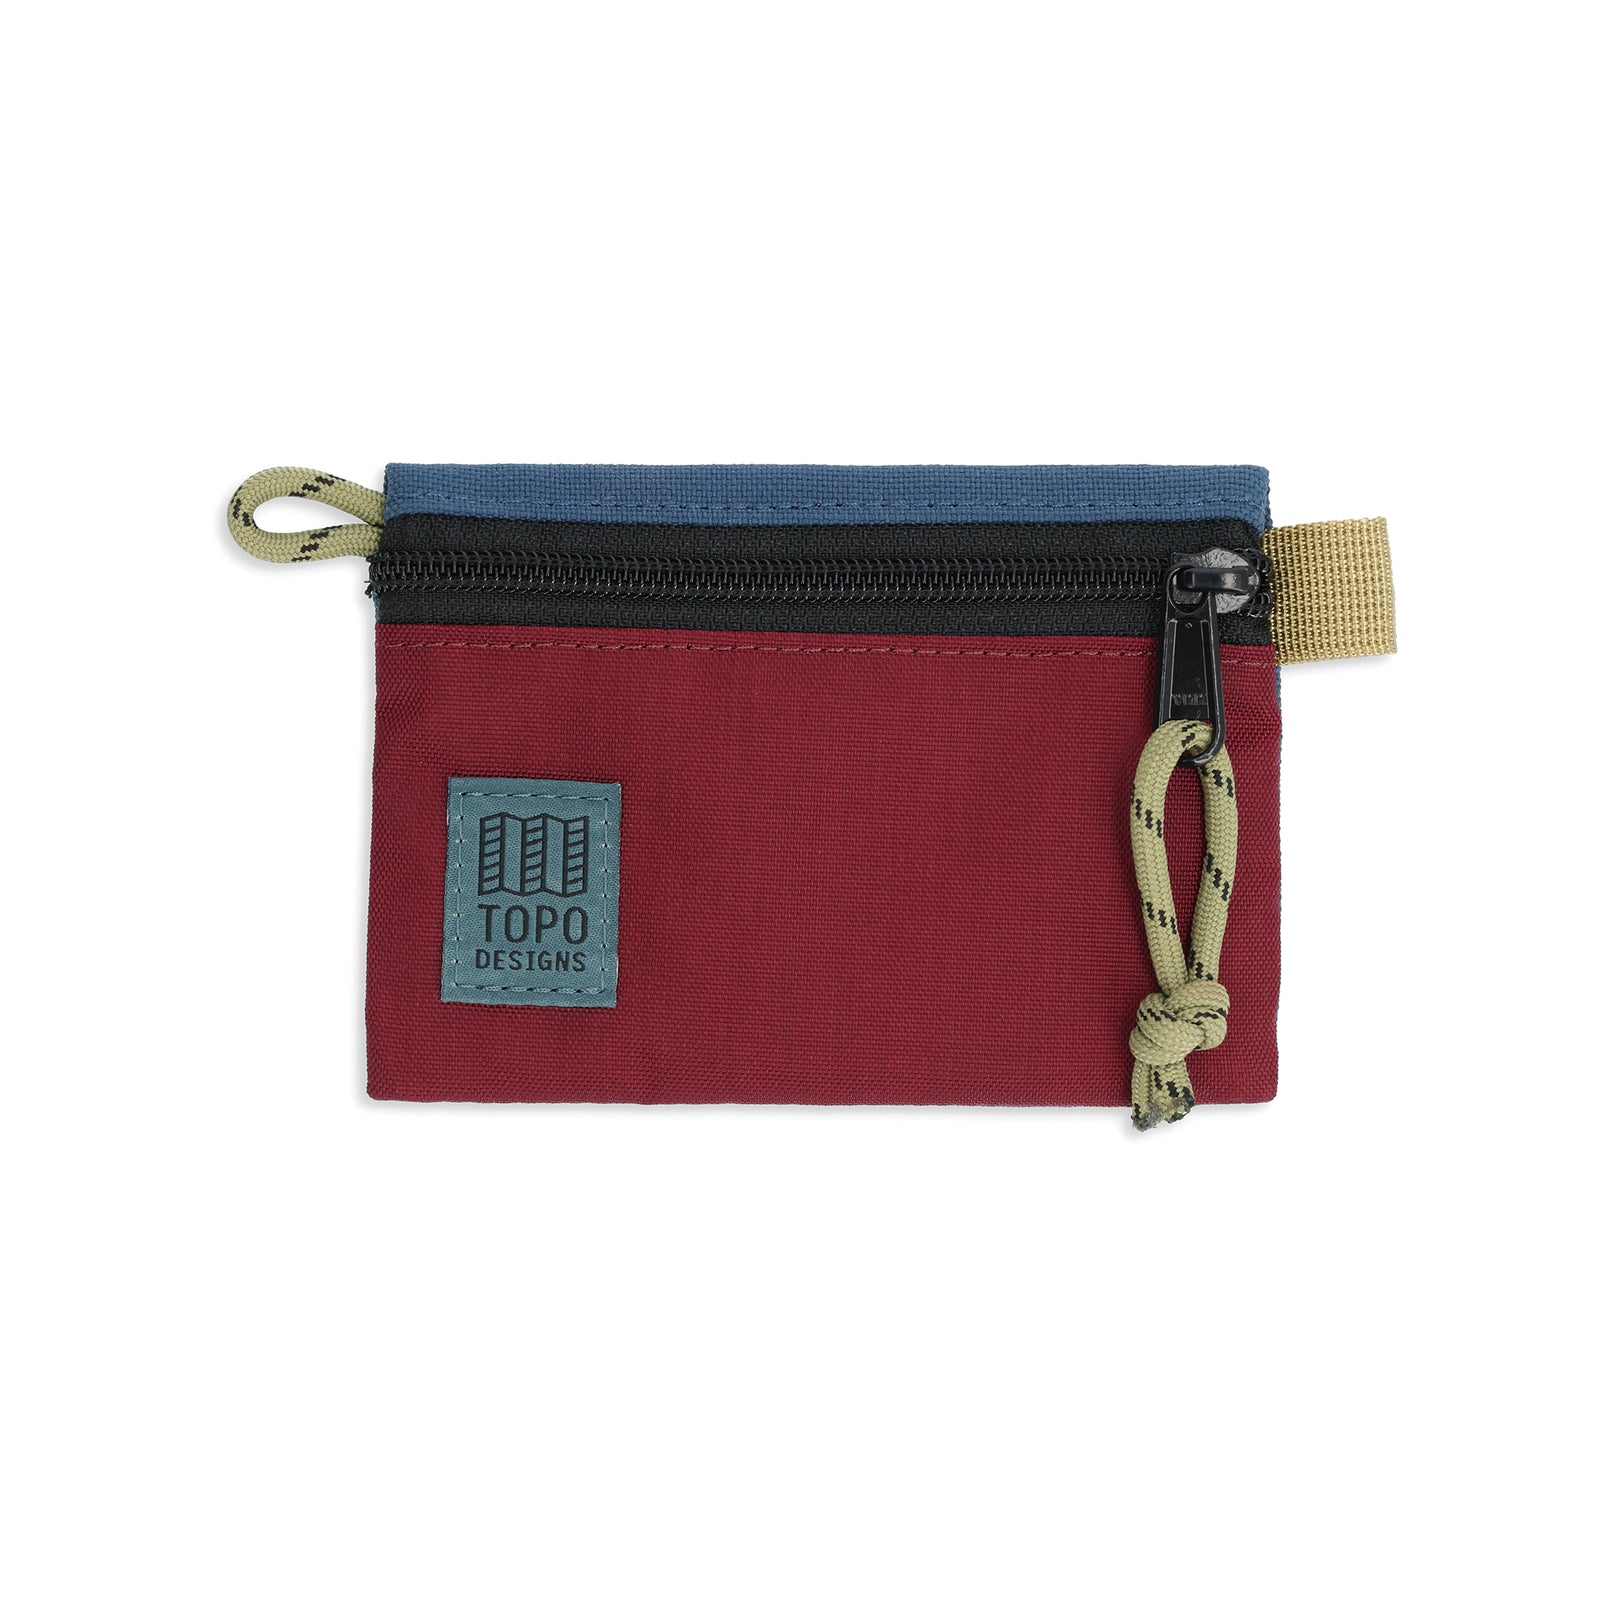 Front View of Topo Designs Accessory Bags in "Micro" "Dark Denim / Burgundy"